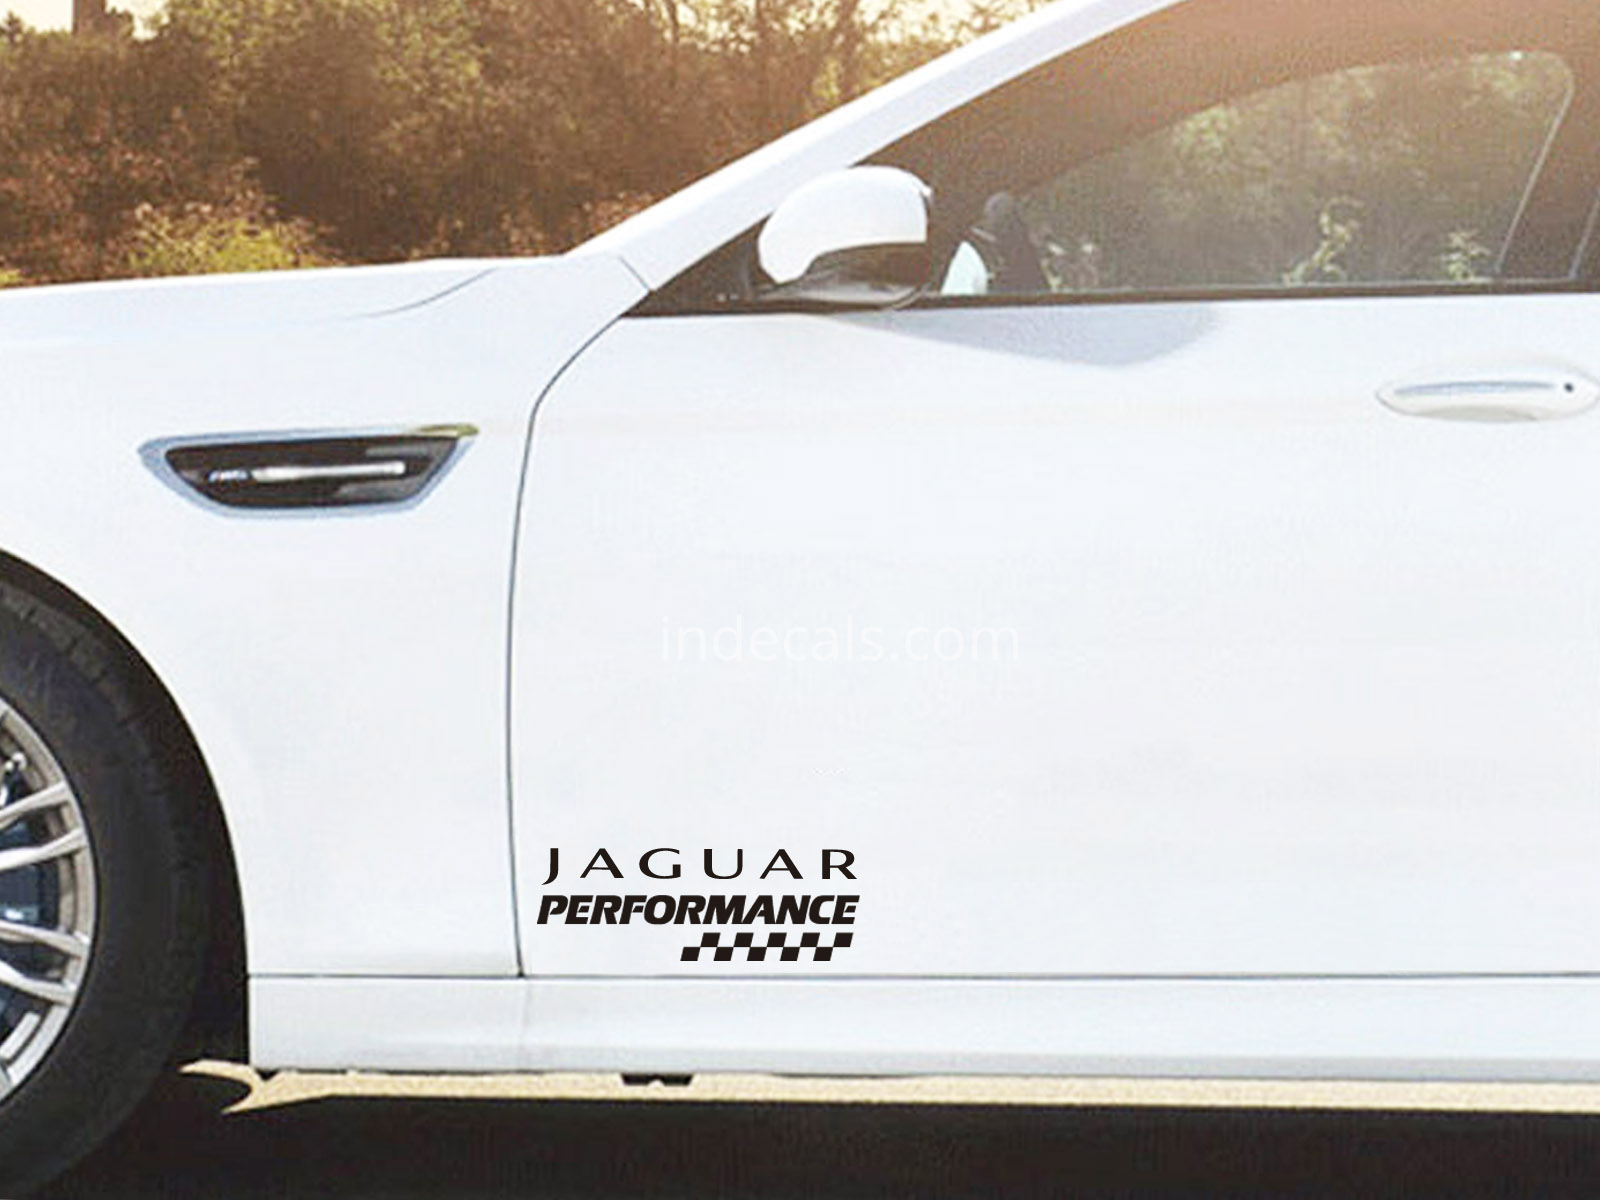 2 x Jaguar Performance Stickers for Doors - Black